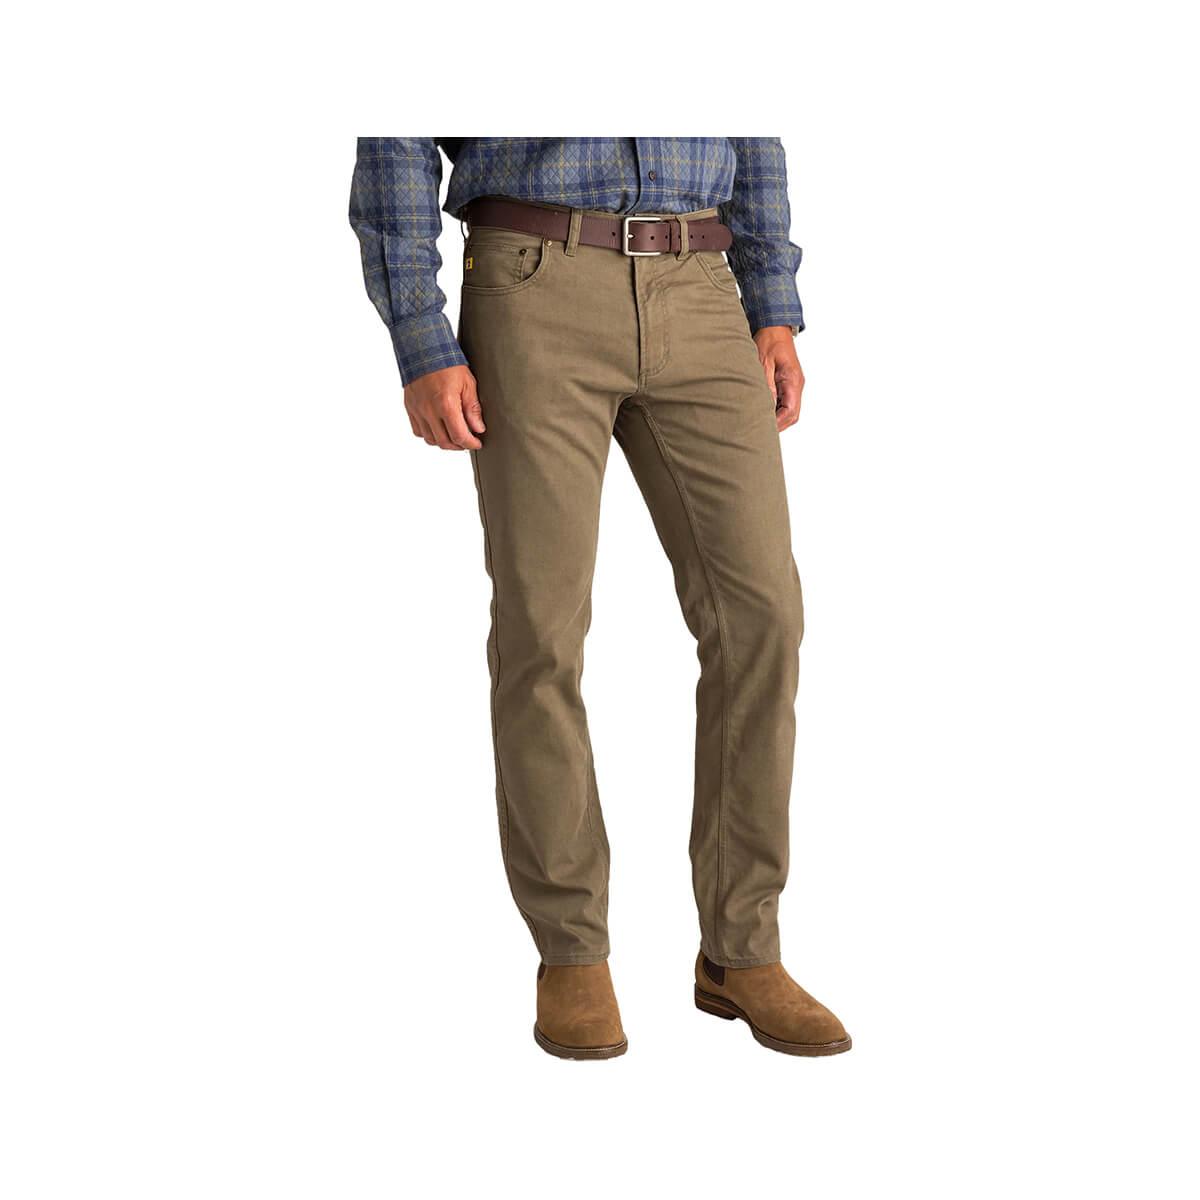  Men's Field Canvas Five Pocket Pants